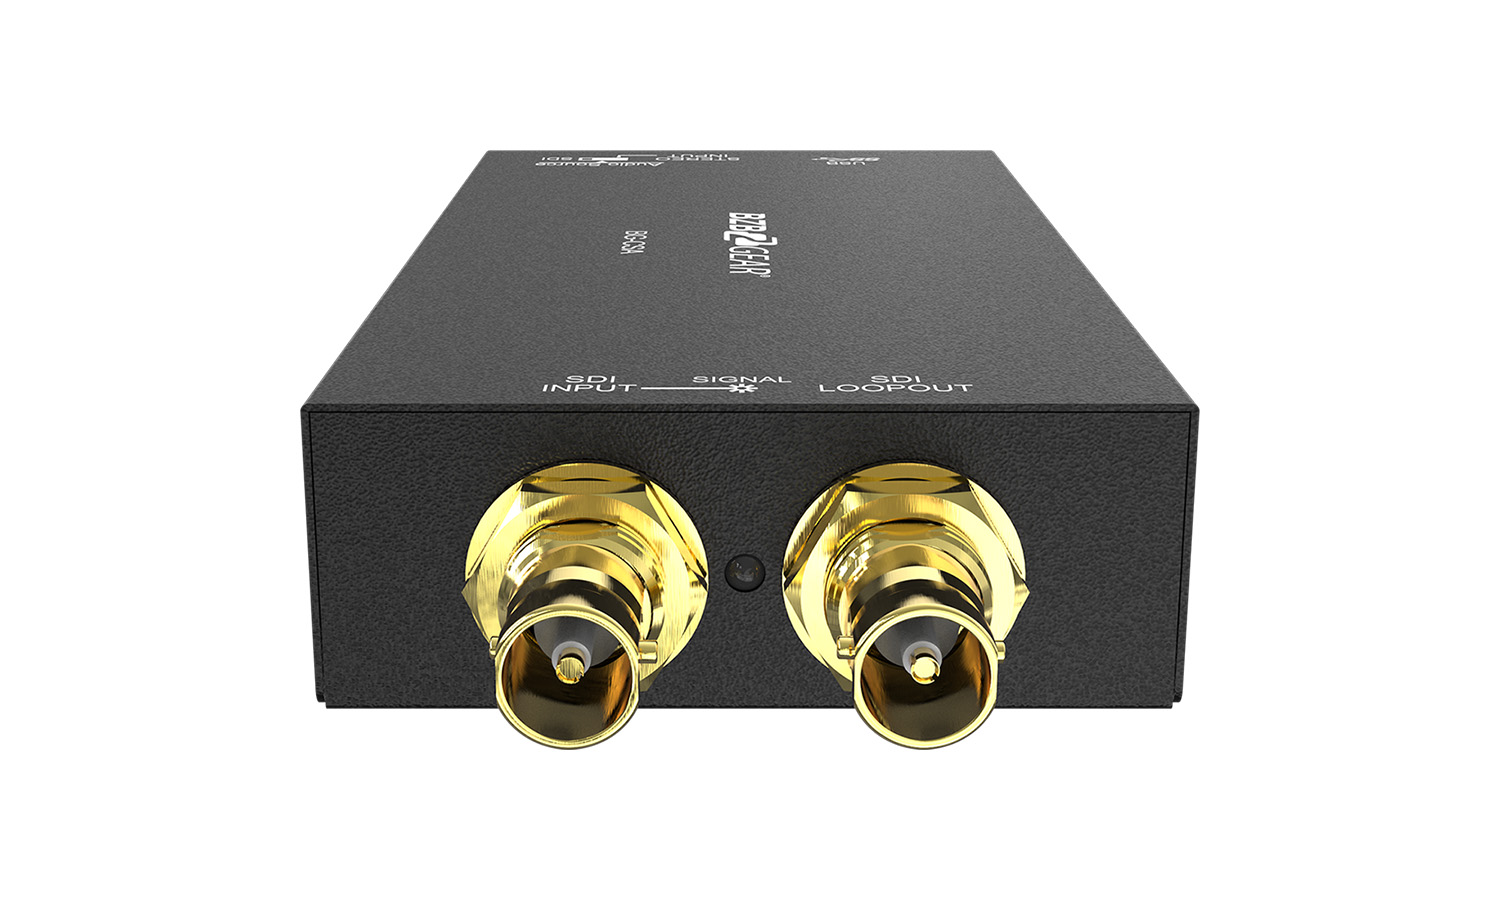 BG-CSA 1080P Full HD USB 3.1 Gen1 3G-SDI Capture Device/Box with Scaler and Audio by BZBGEAR